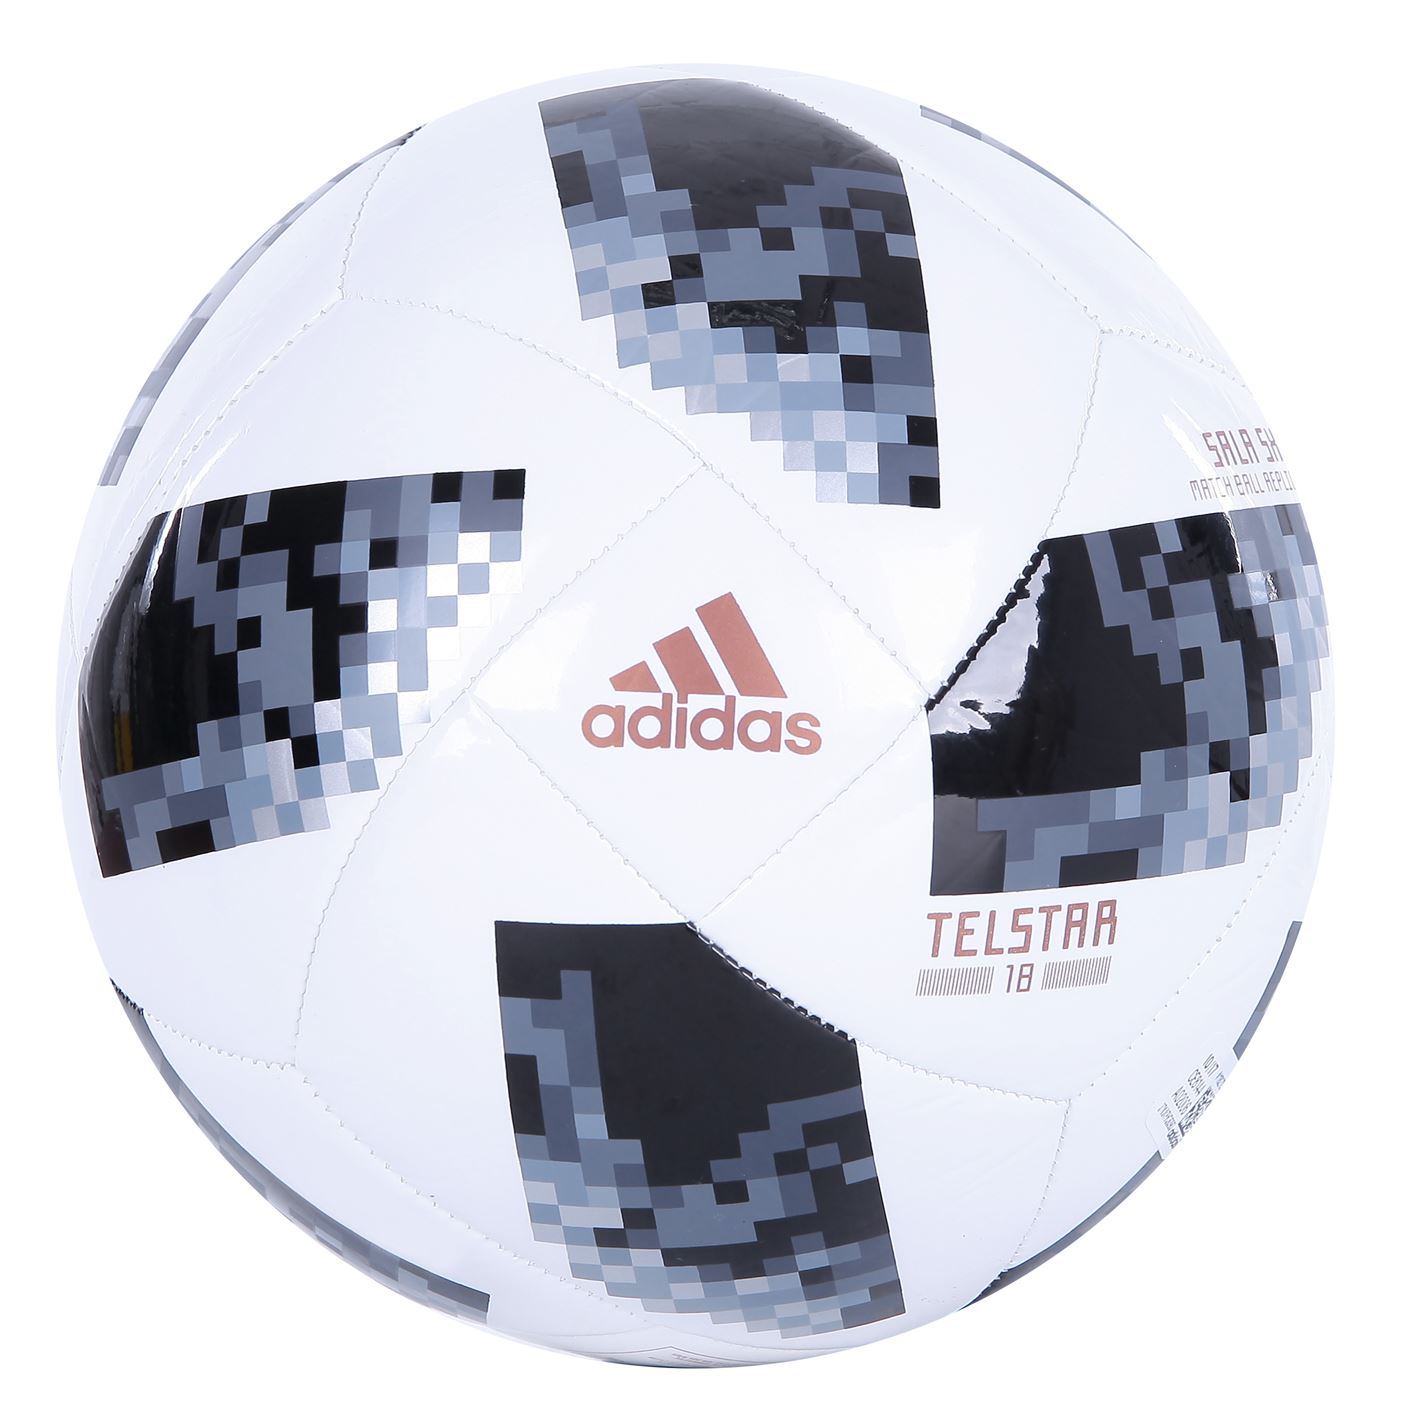 Minge fotbal adidas Cupa Mondiala 2018 Sala 5X5 Telstar Futsal alb negru slv